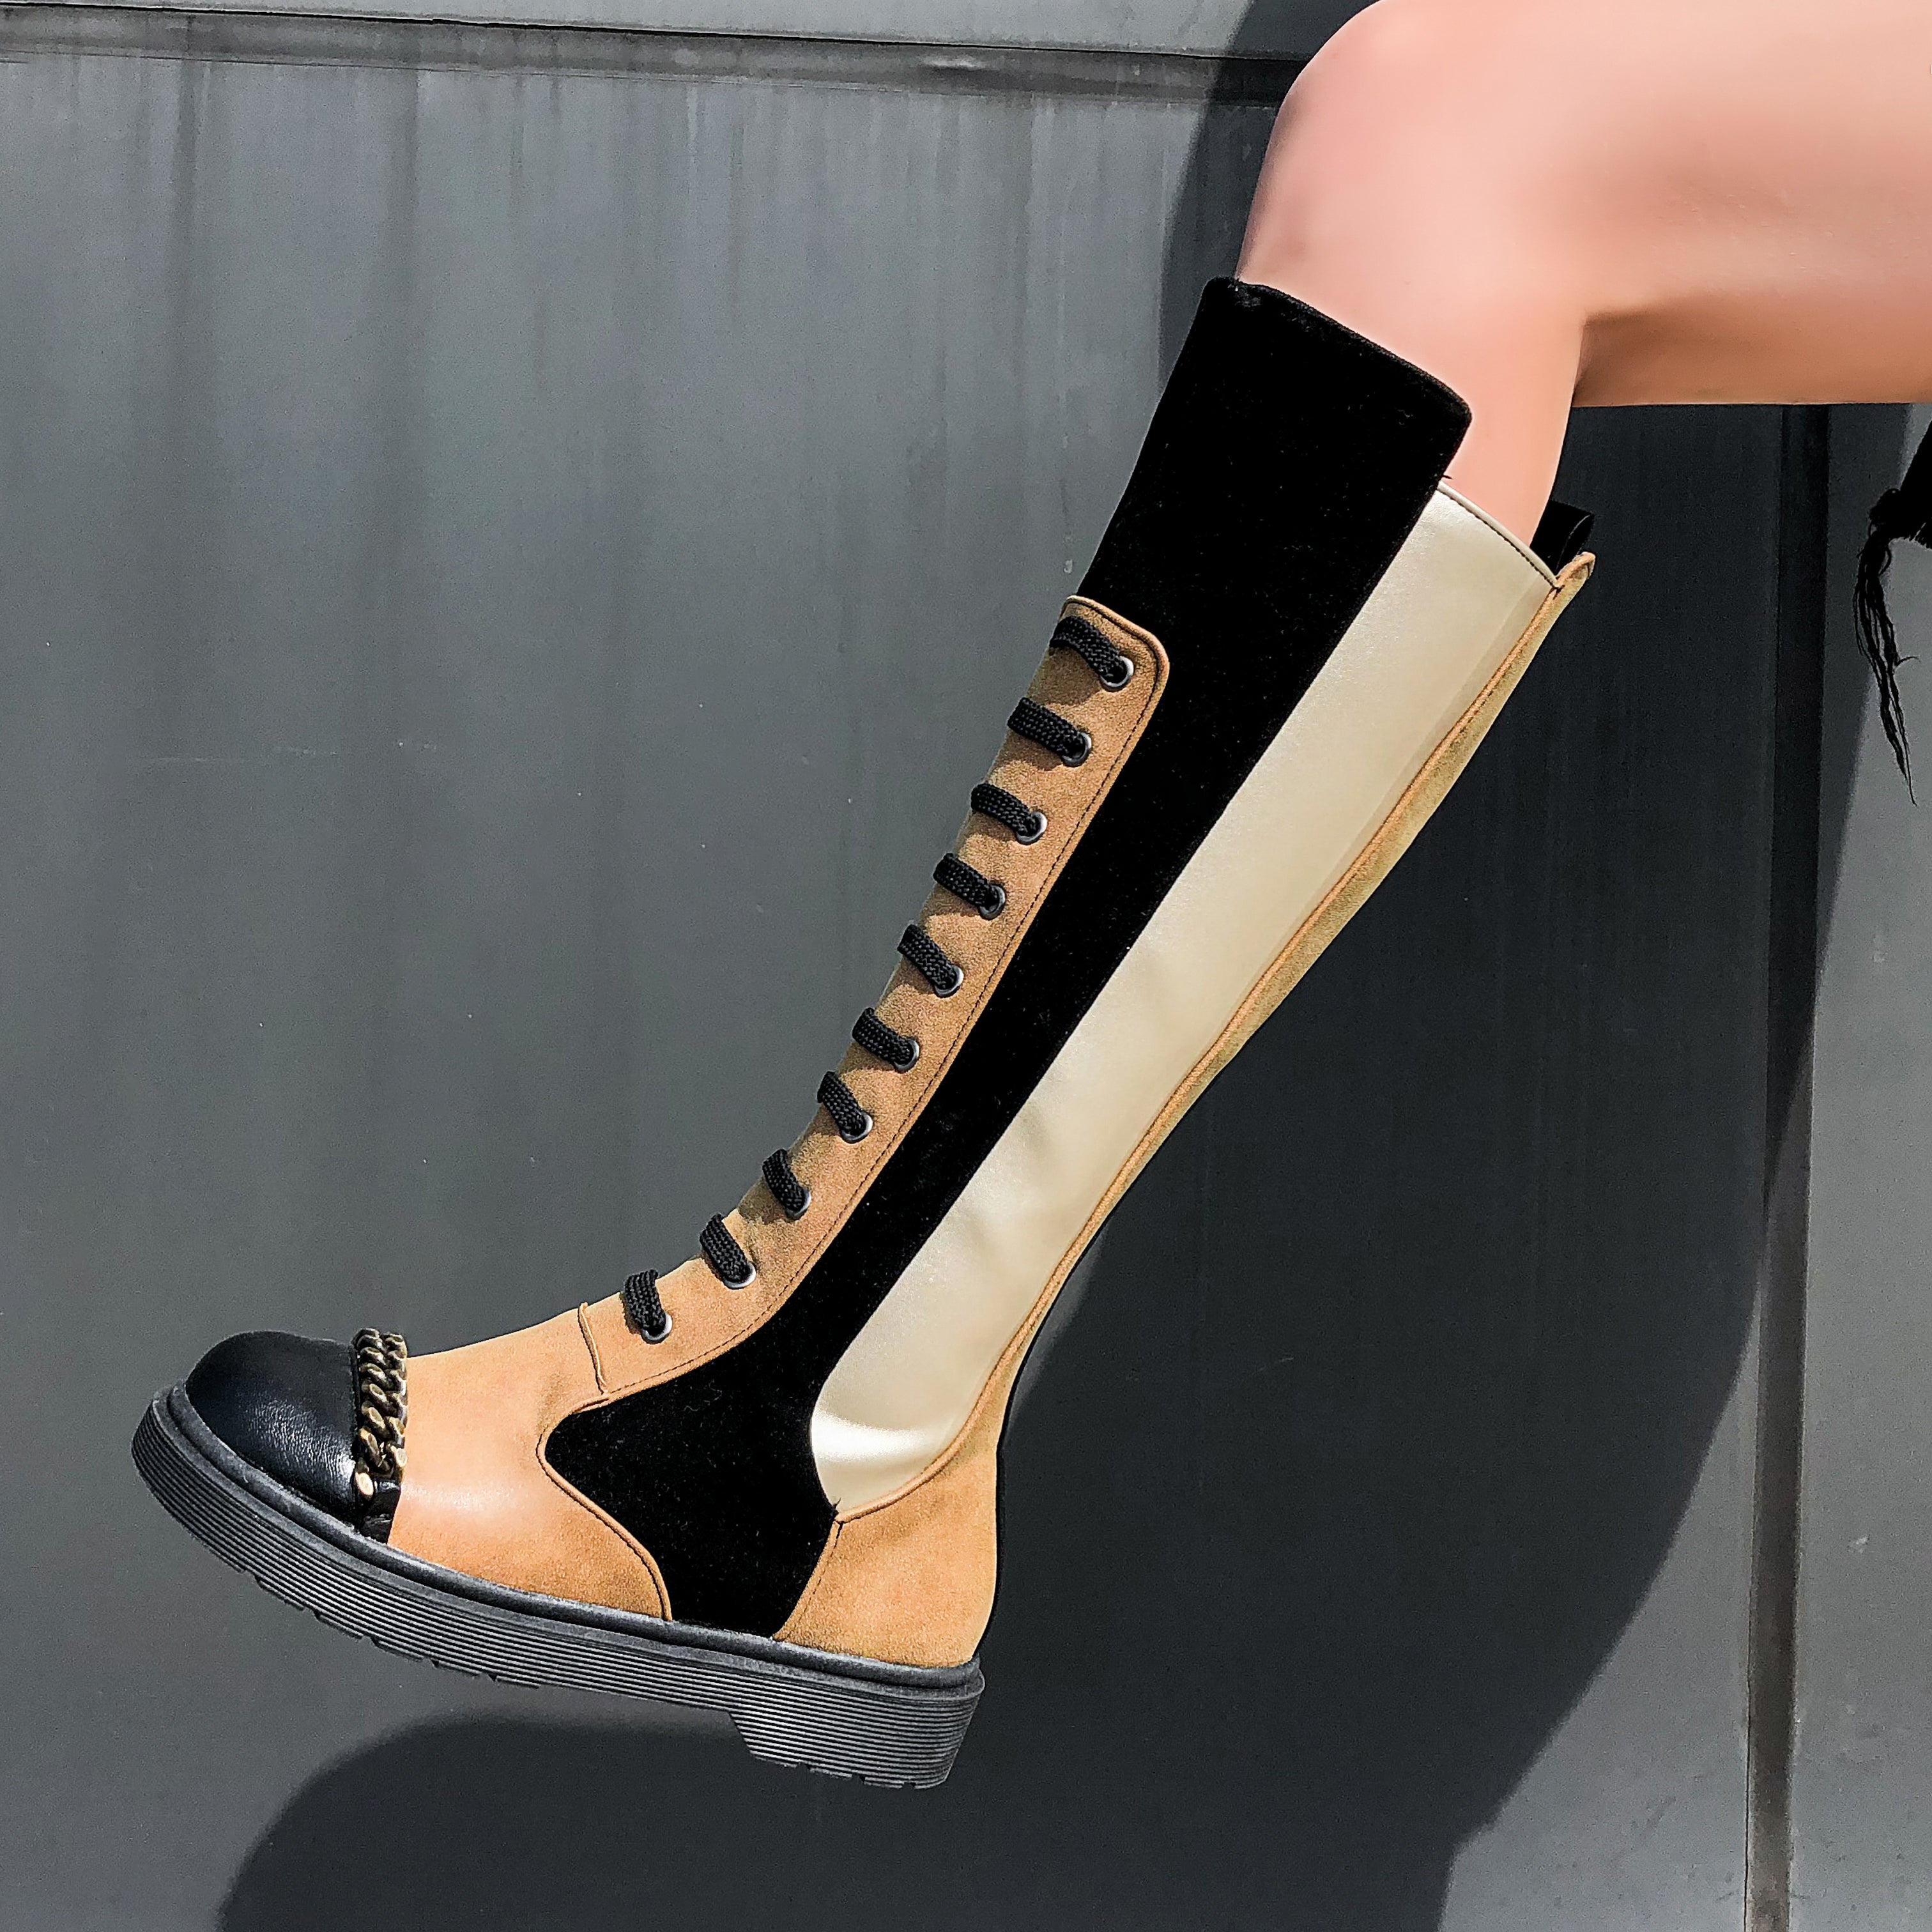 Bigsizeheels Round toe punk spliced flat boots - Brown freeshipping - bigsizeheel®-size5-size15 -All Plus Sizes Available!